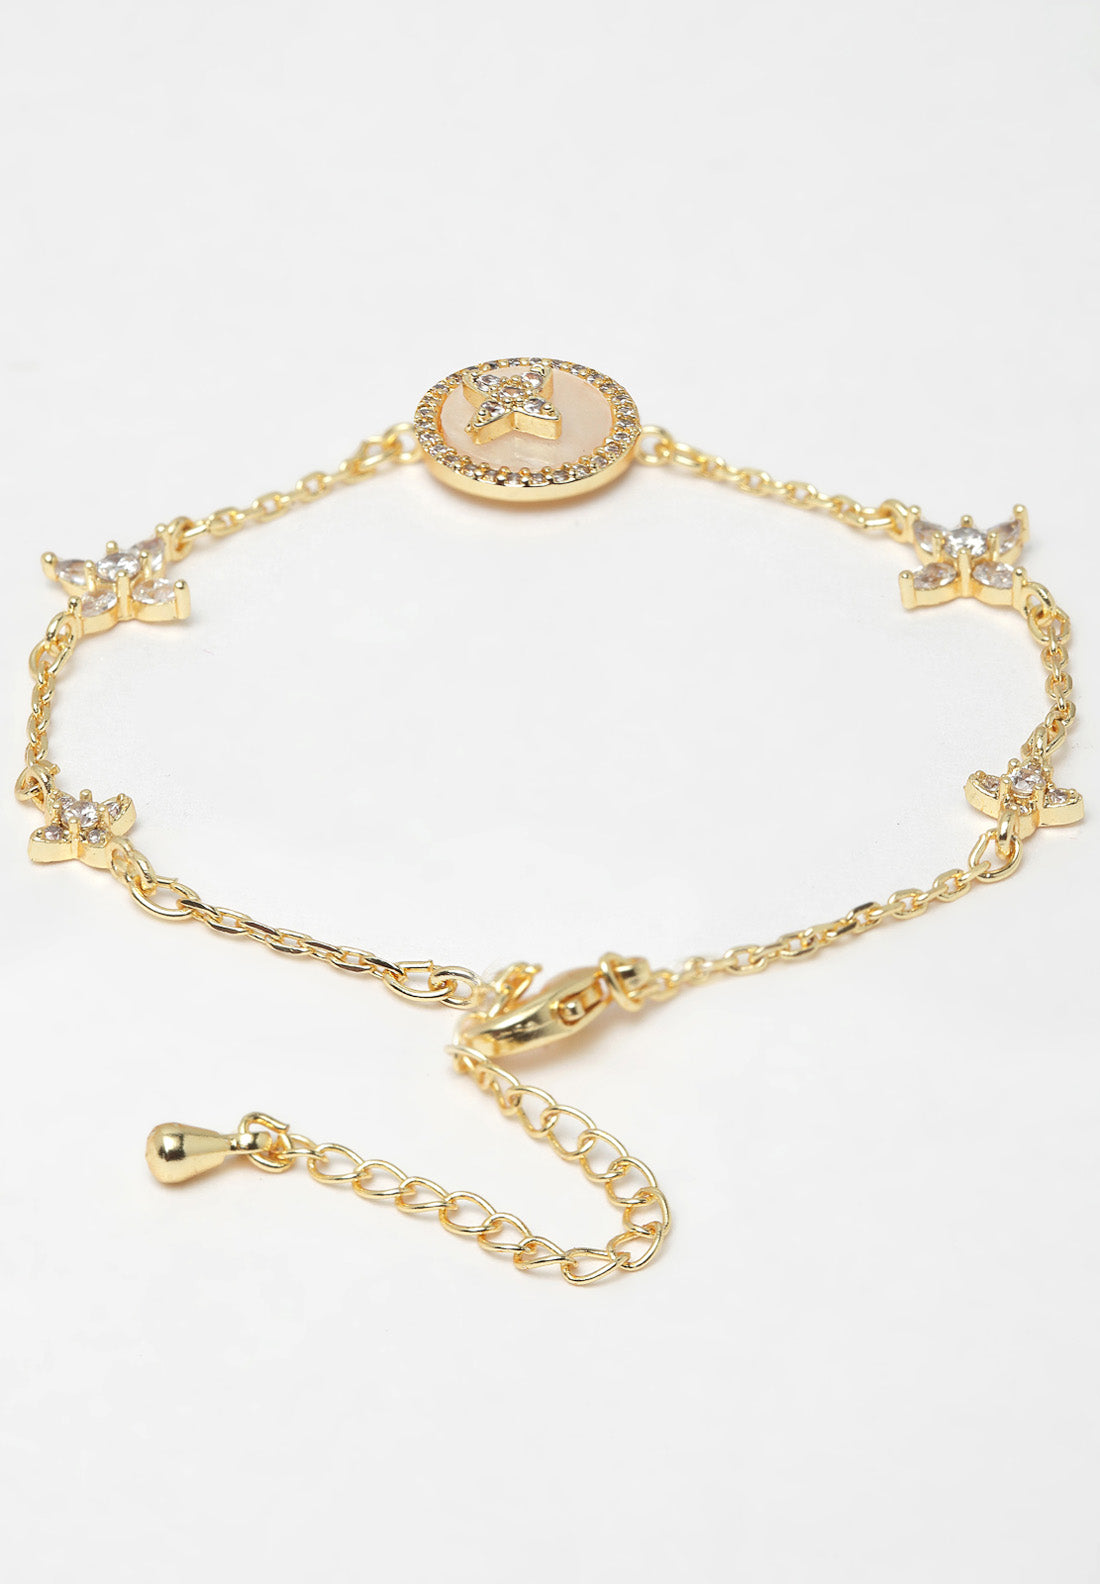 Avantgardistisches Pariser Goldkristall-Armband